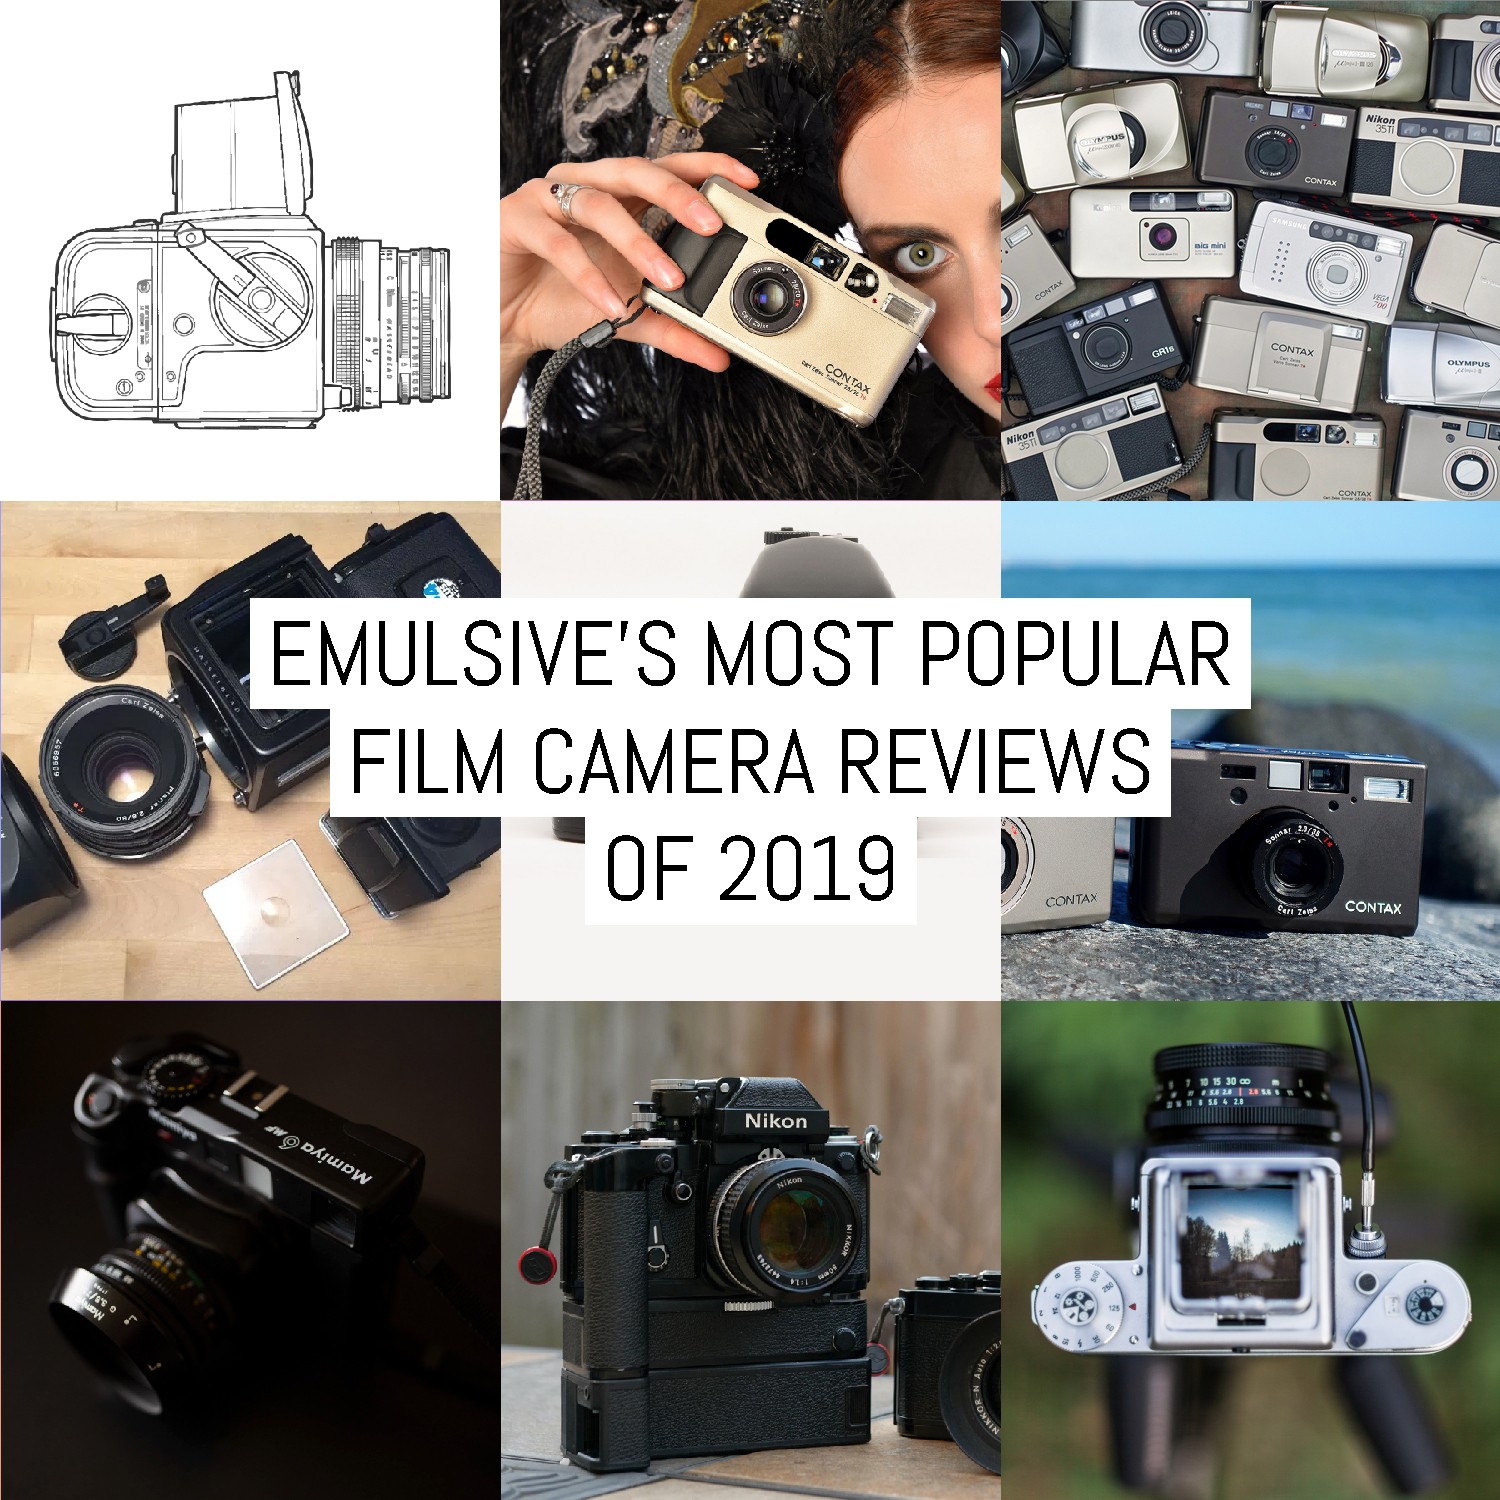 EMULSIVE’s most popular film camera reviews of 2019